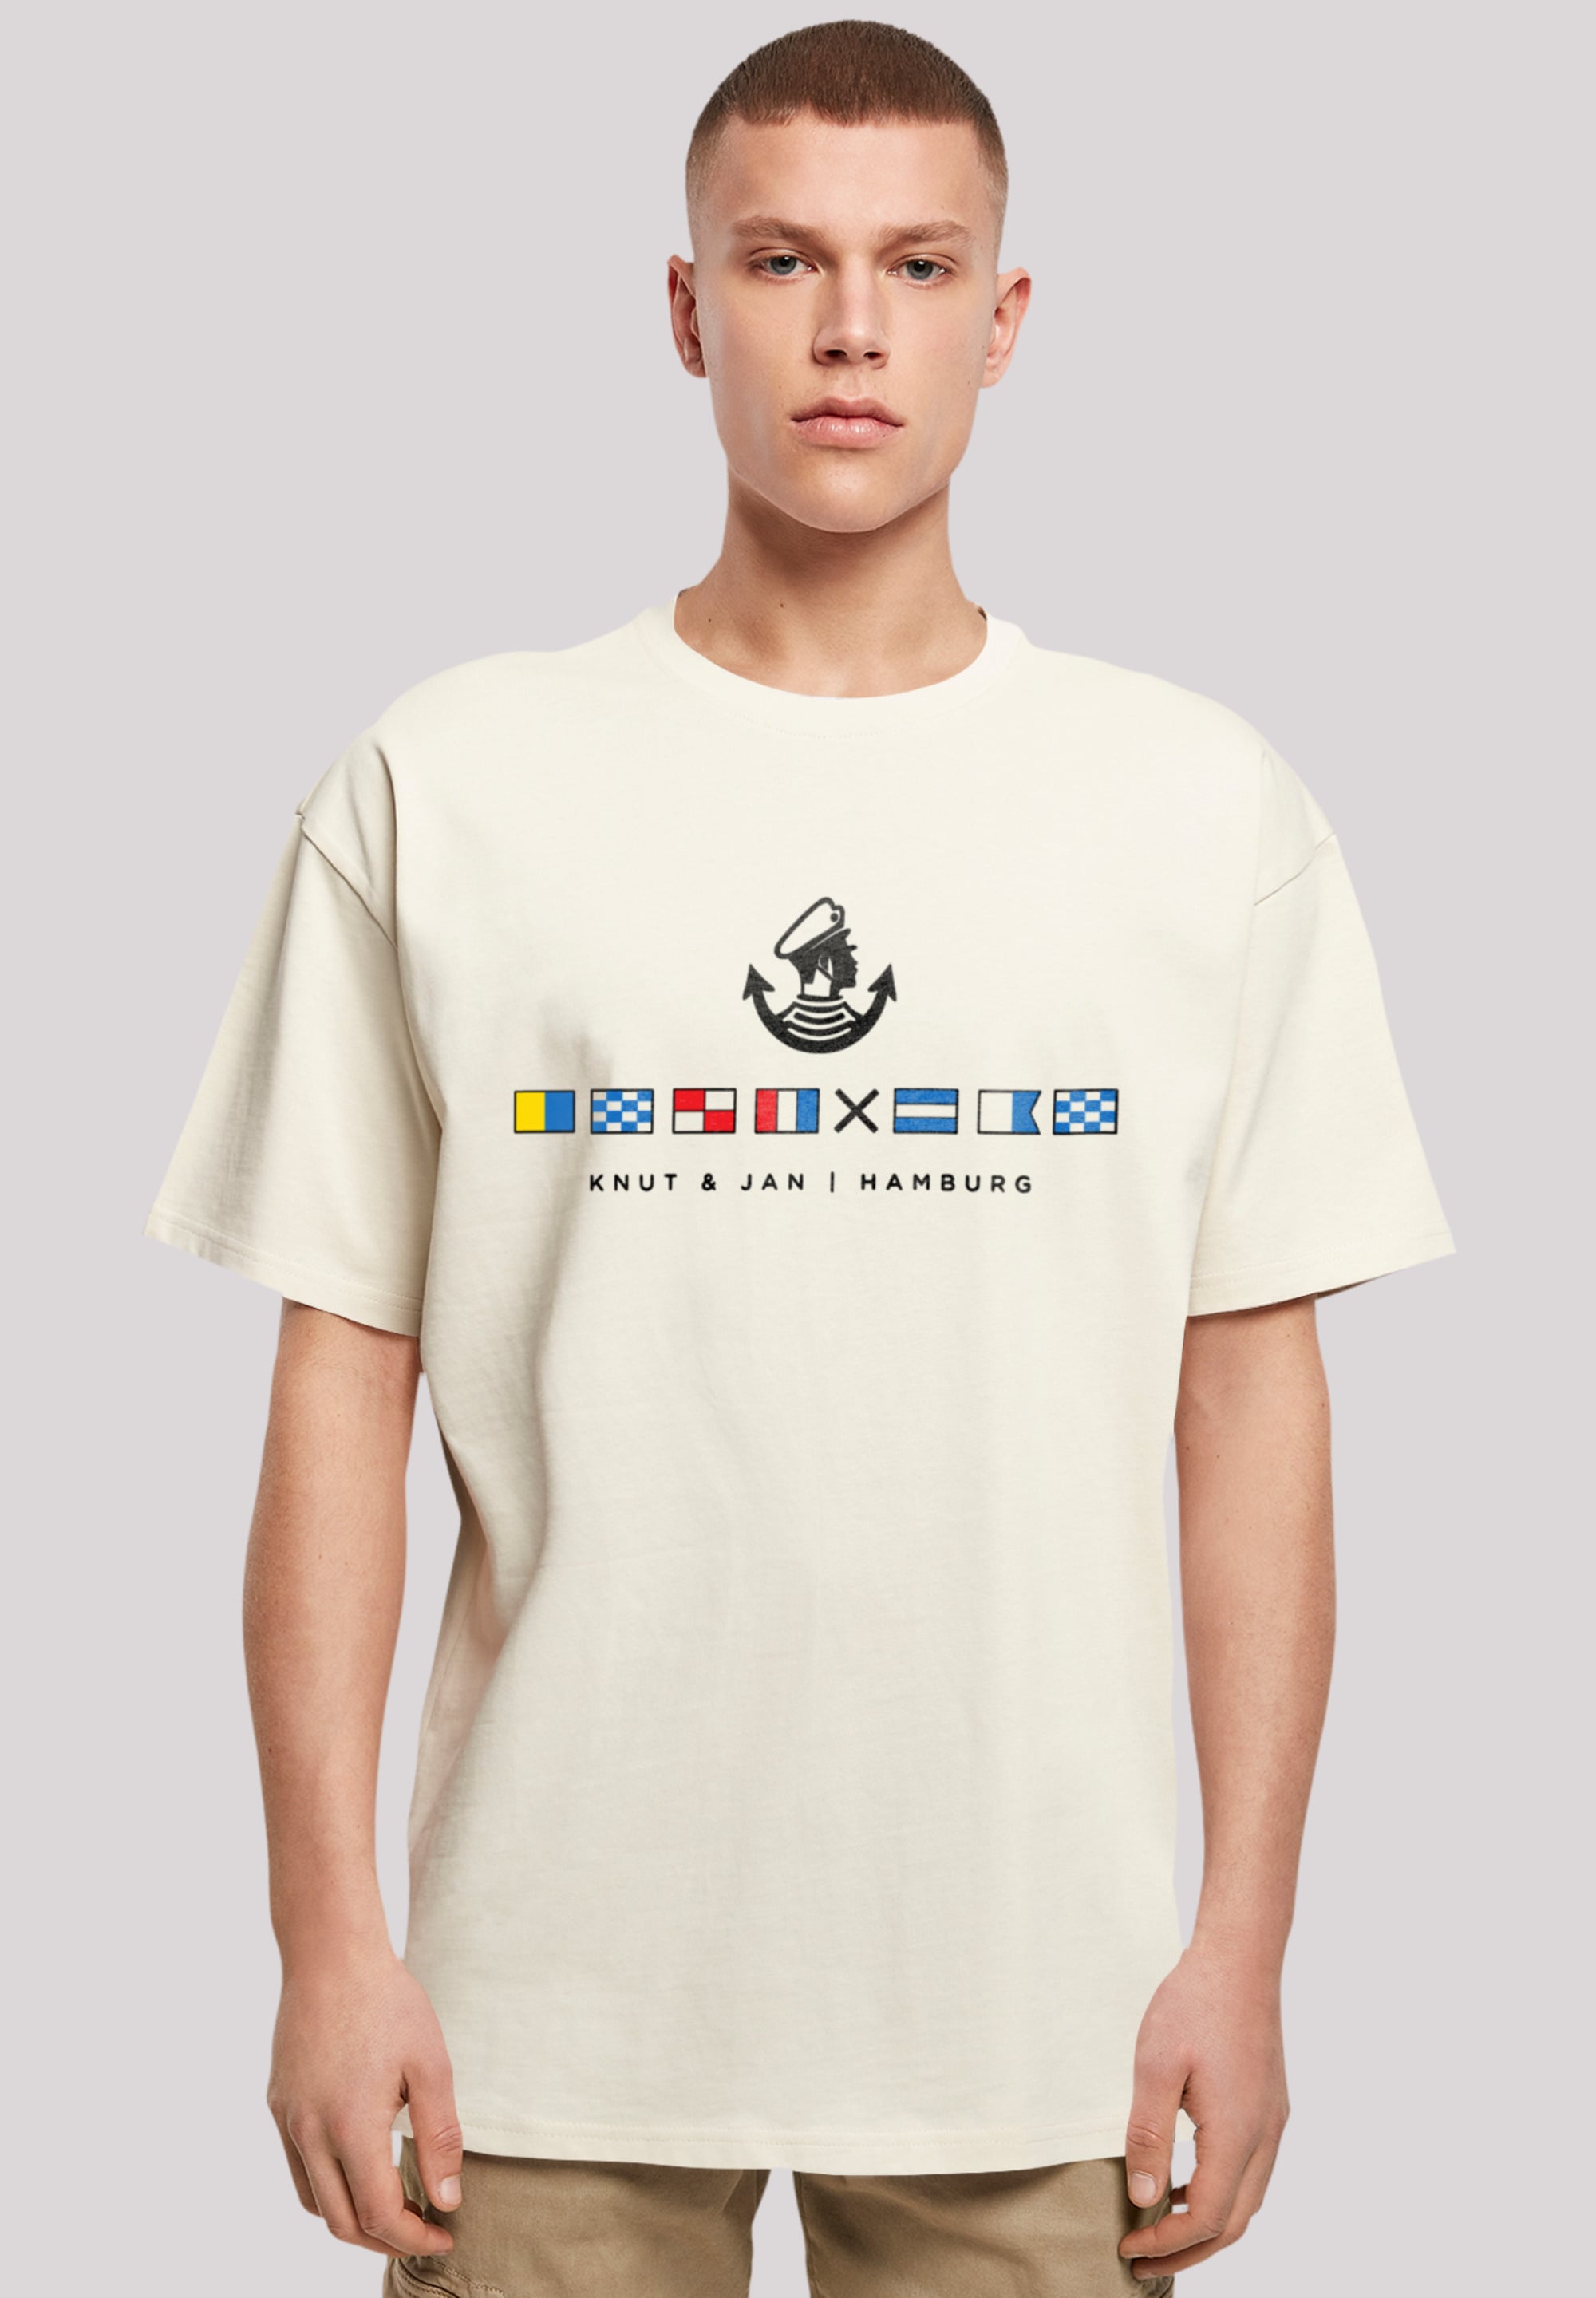 F4NT4STIC T-Shirt "Oversized T-Shirt Seglerfahnen Knut & Jan Hamburg", Prin günstig online kaufen